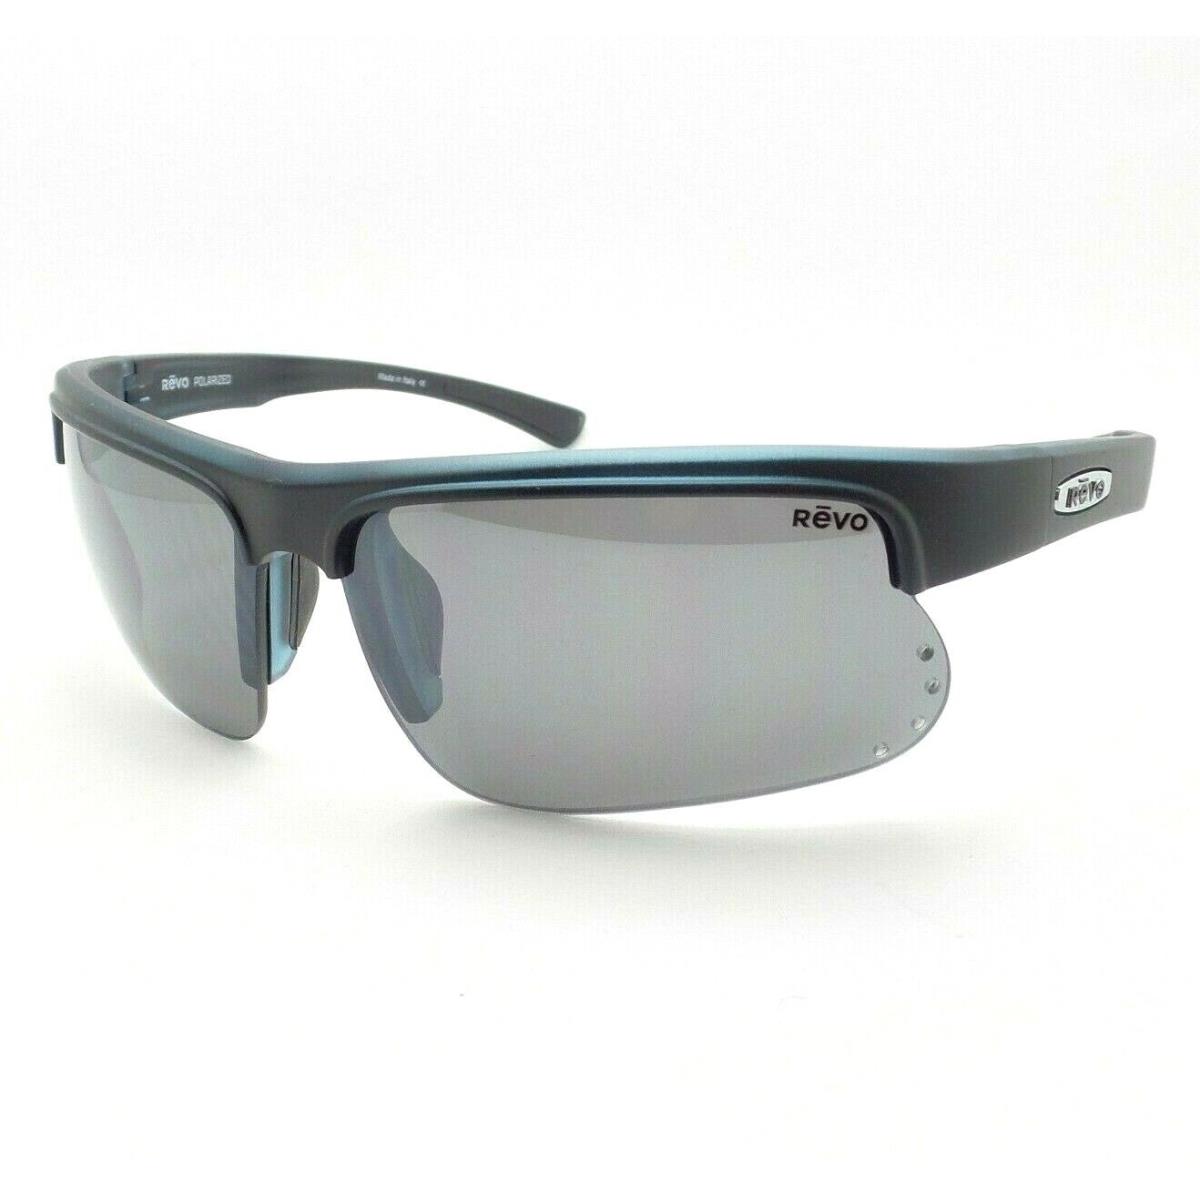 Revo Cusp S Matte Black Grey Graphite Polarized UV Sunglasses